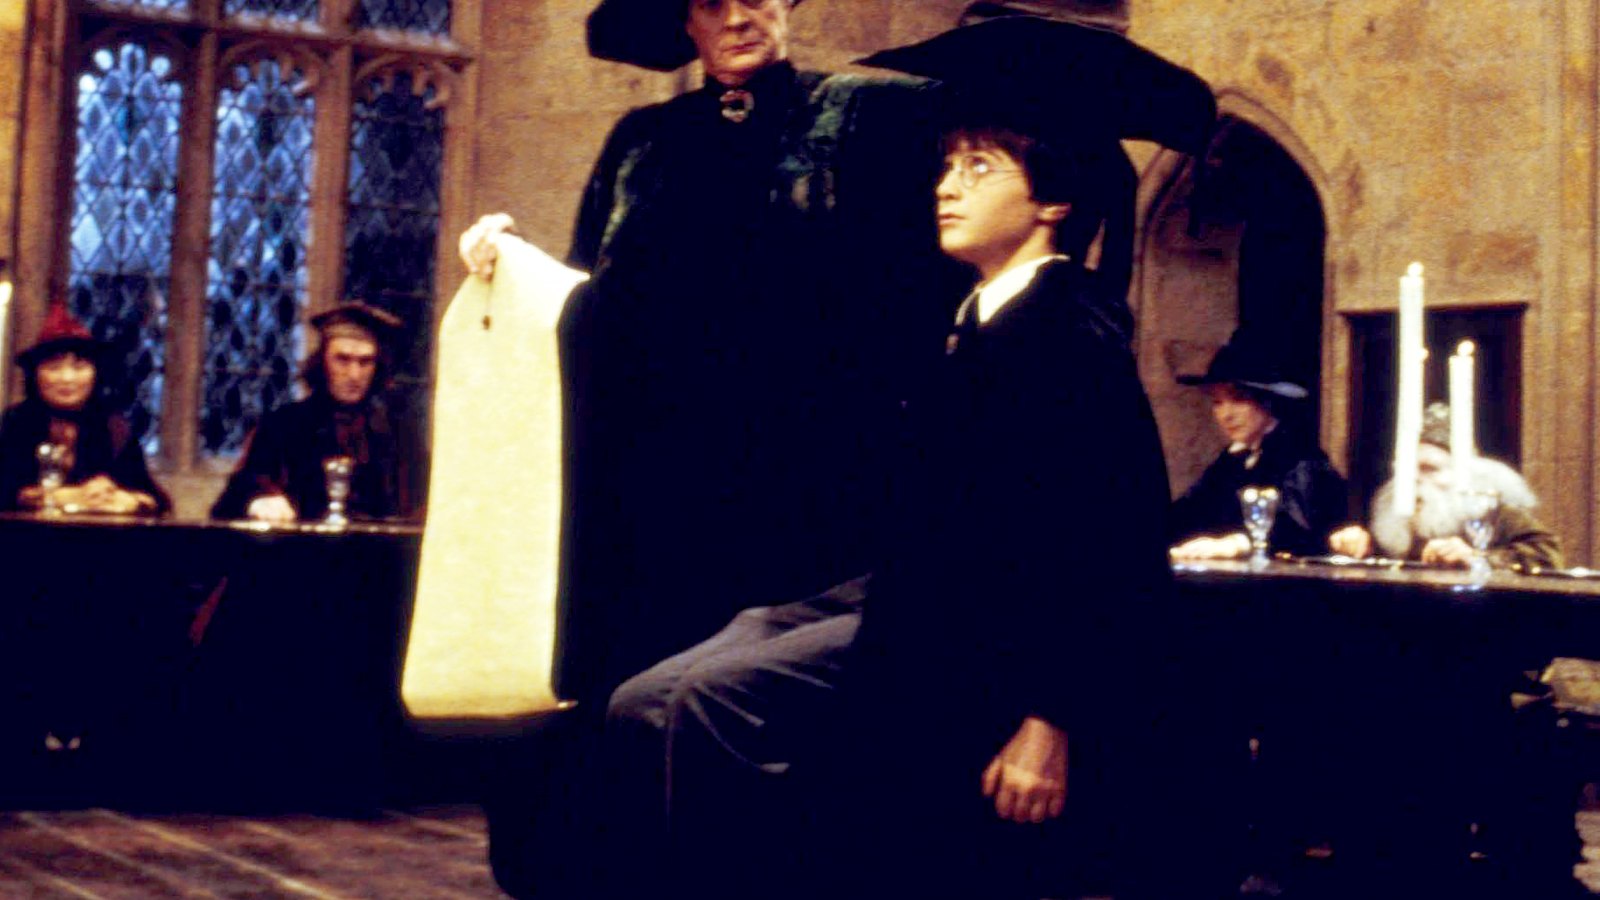 Professor McGonagall and Harry Potter